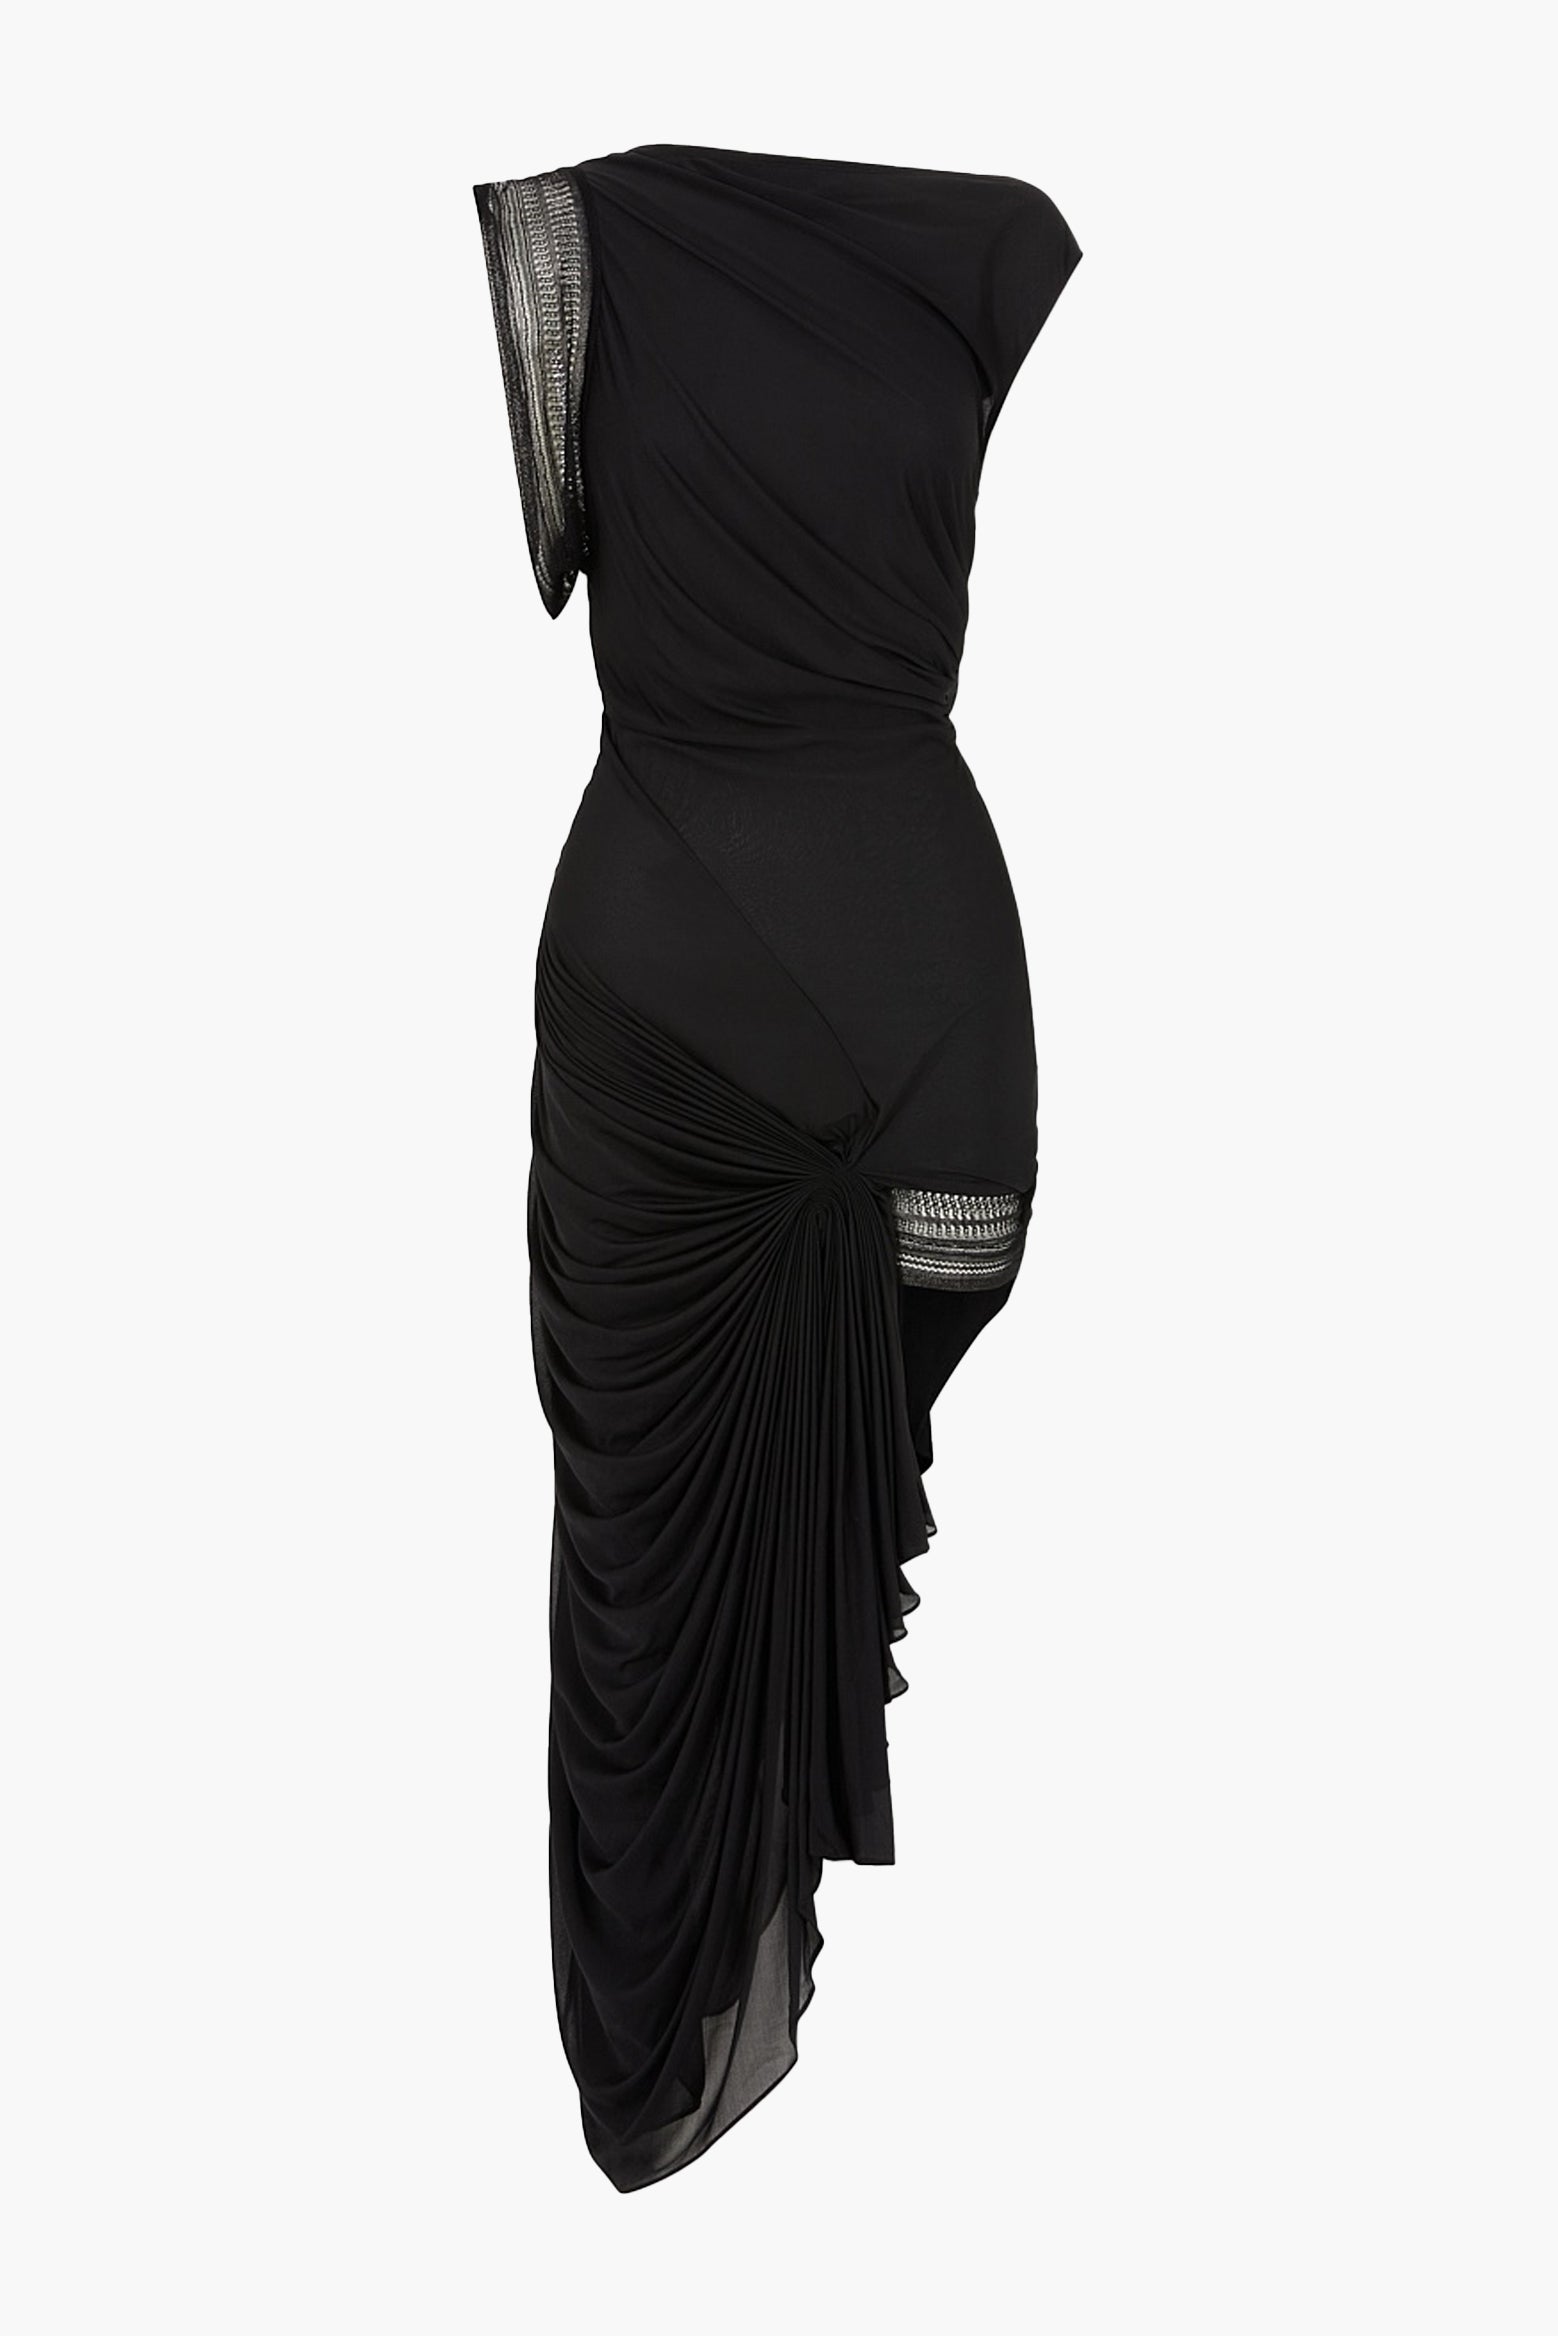 Christopher Esber Galathea Asymmetric long Dress in Black available at The New Trend Australia.